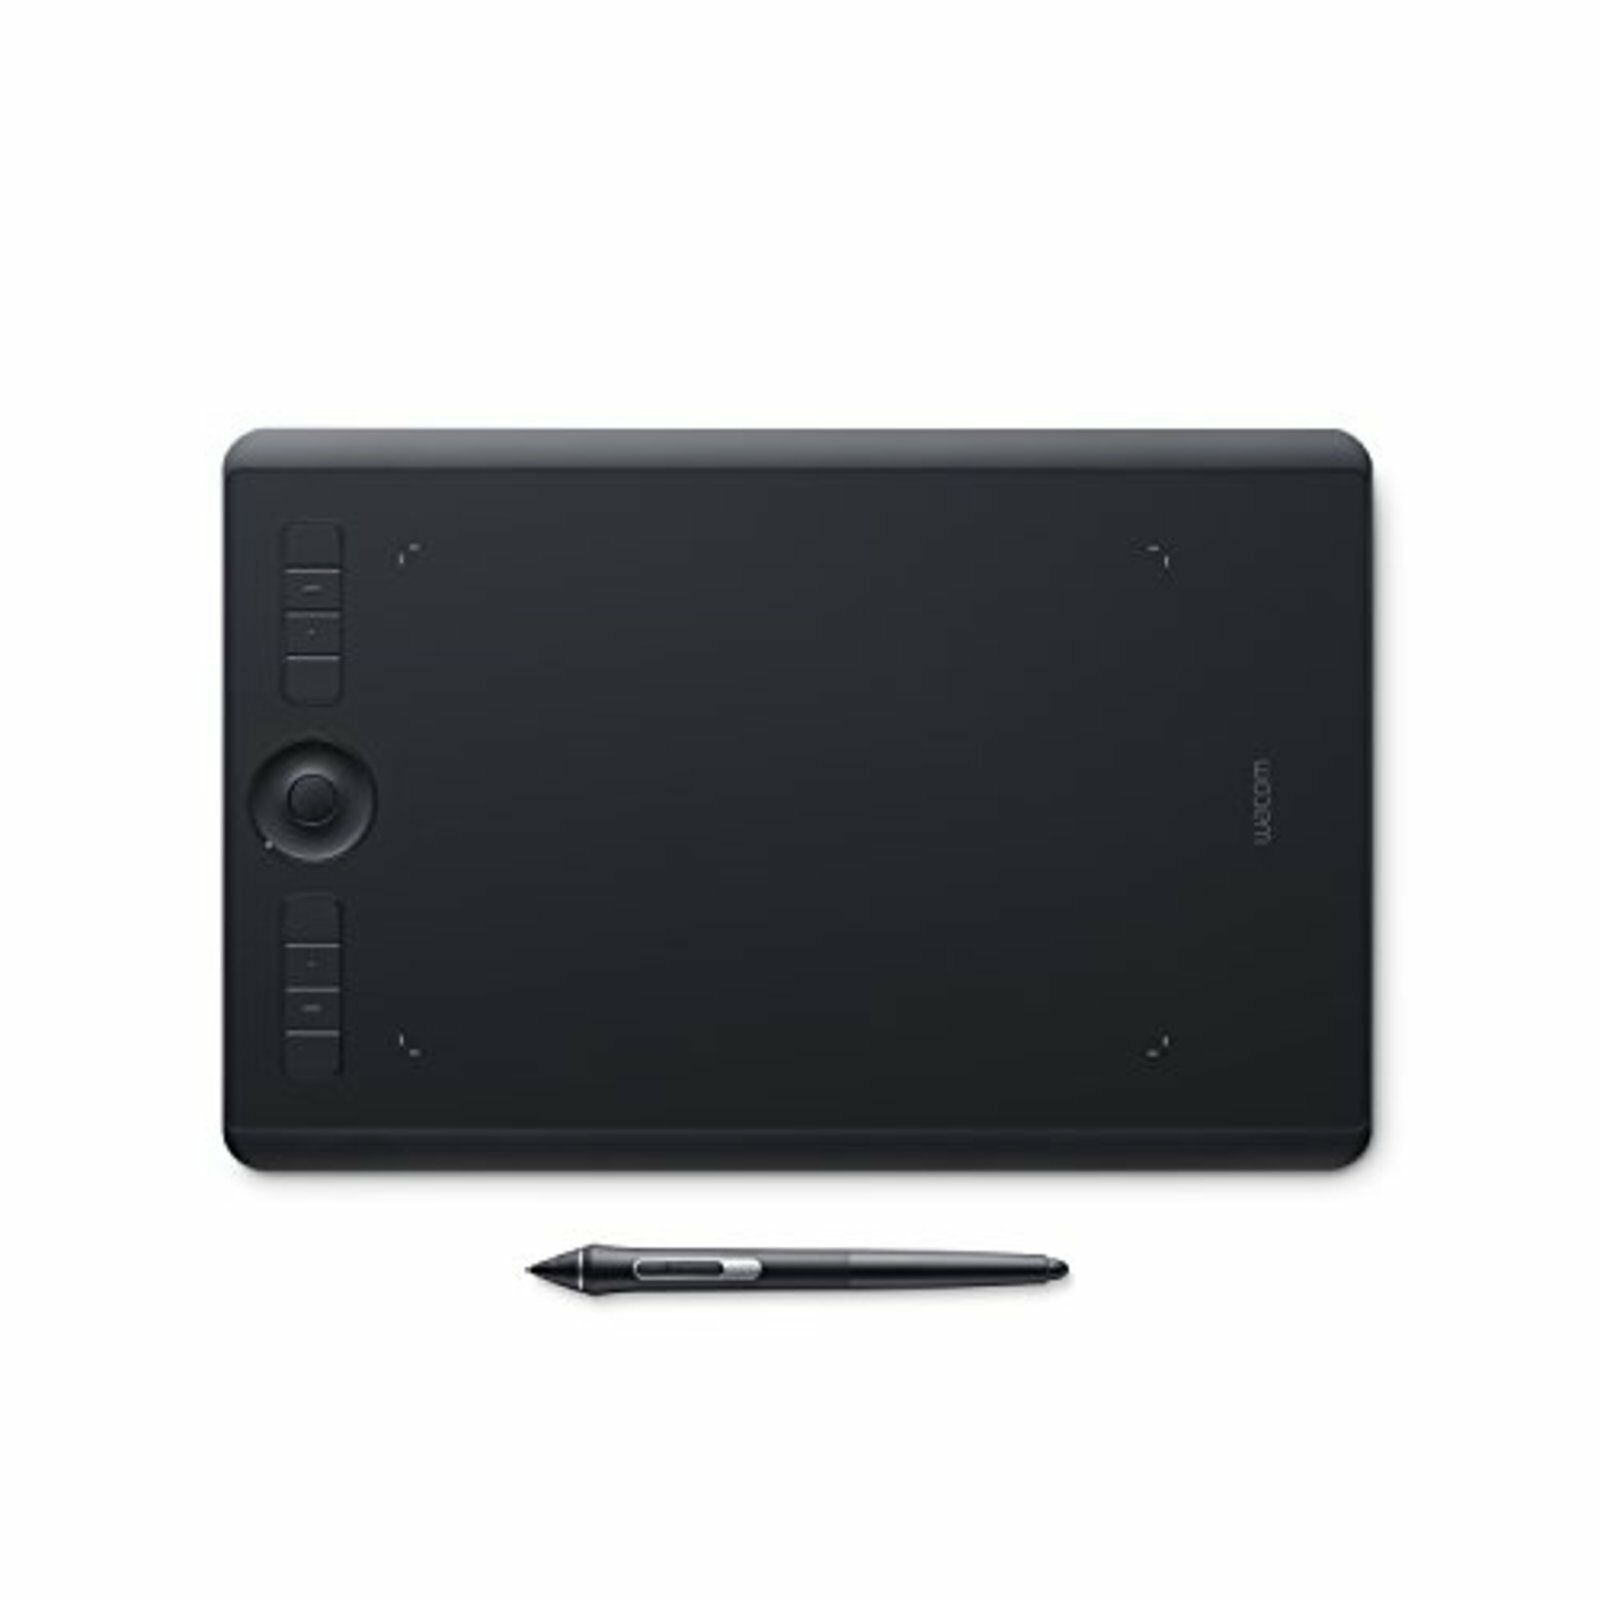 Wacom Pen Tablet Intuos Pro Medium PTH-660/K0 2017 F/S w/Tracking# Japan New